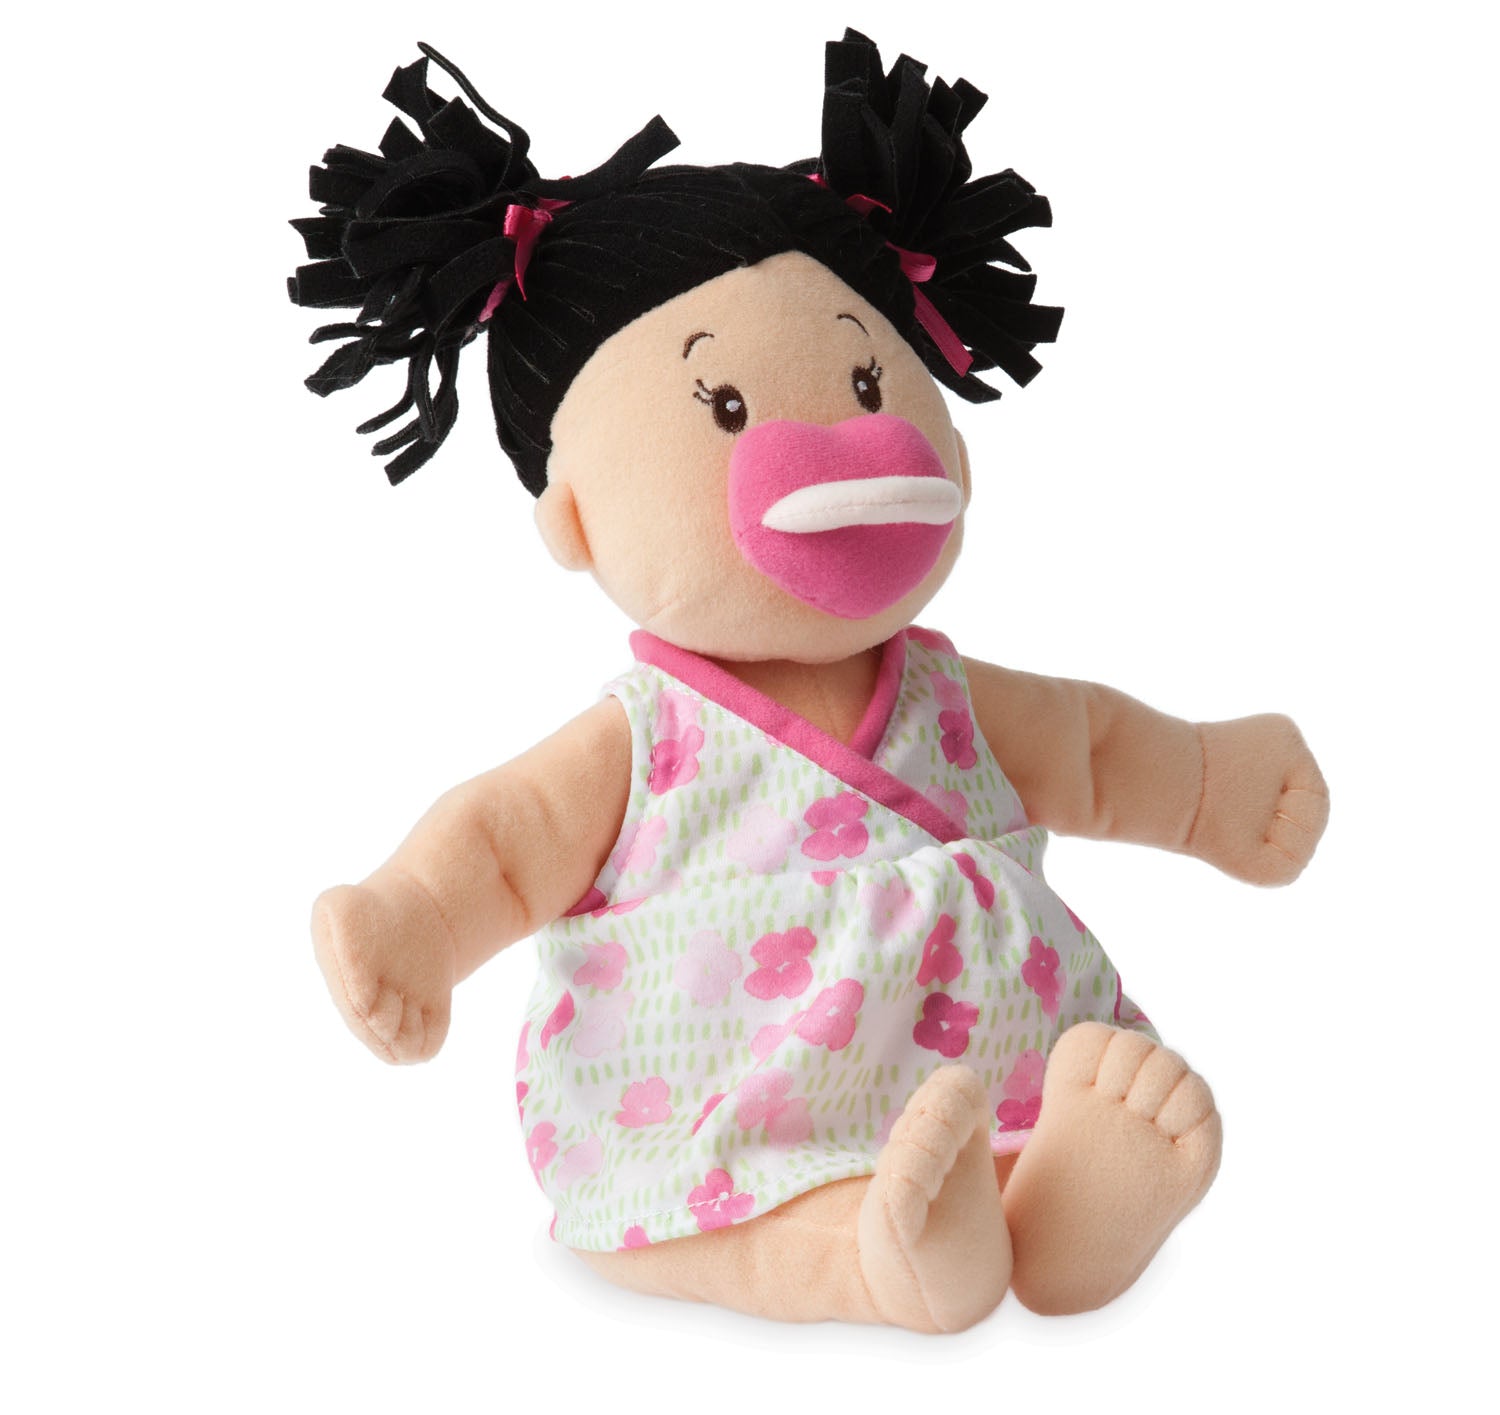 Manhattan Toy Baby Stella Peach Doll with Black Hair Dolls